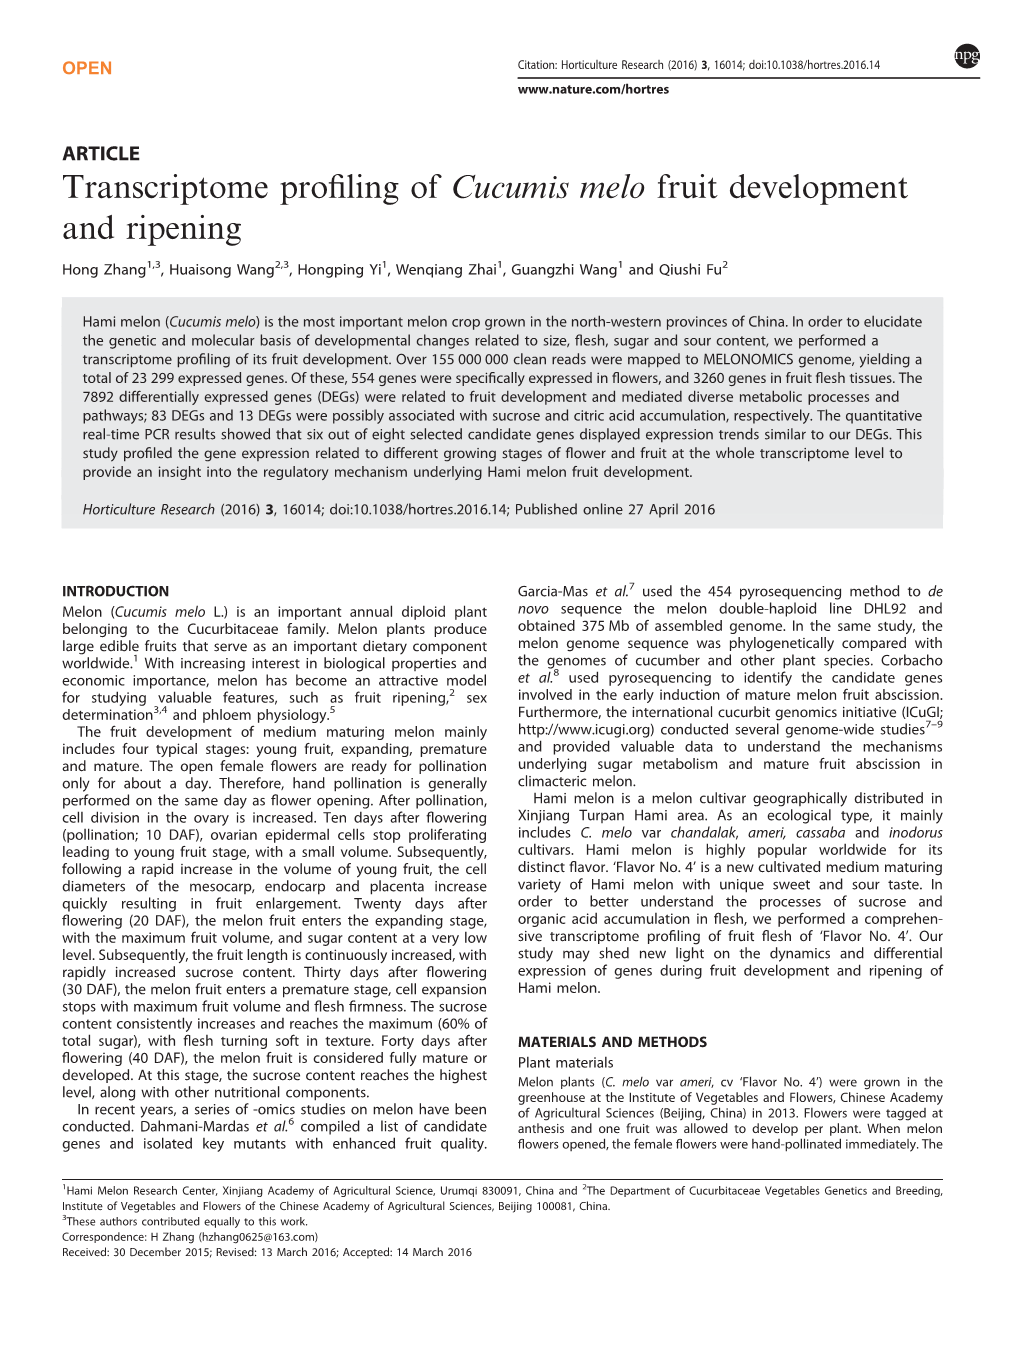 Transcriptome Profiling of Cucumis Melo Fruit Development and Ripening